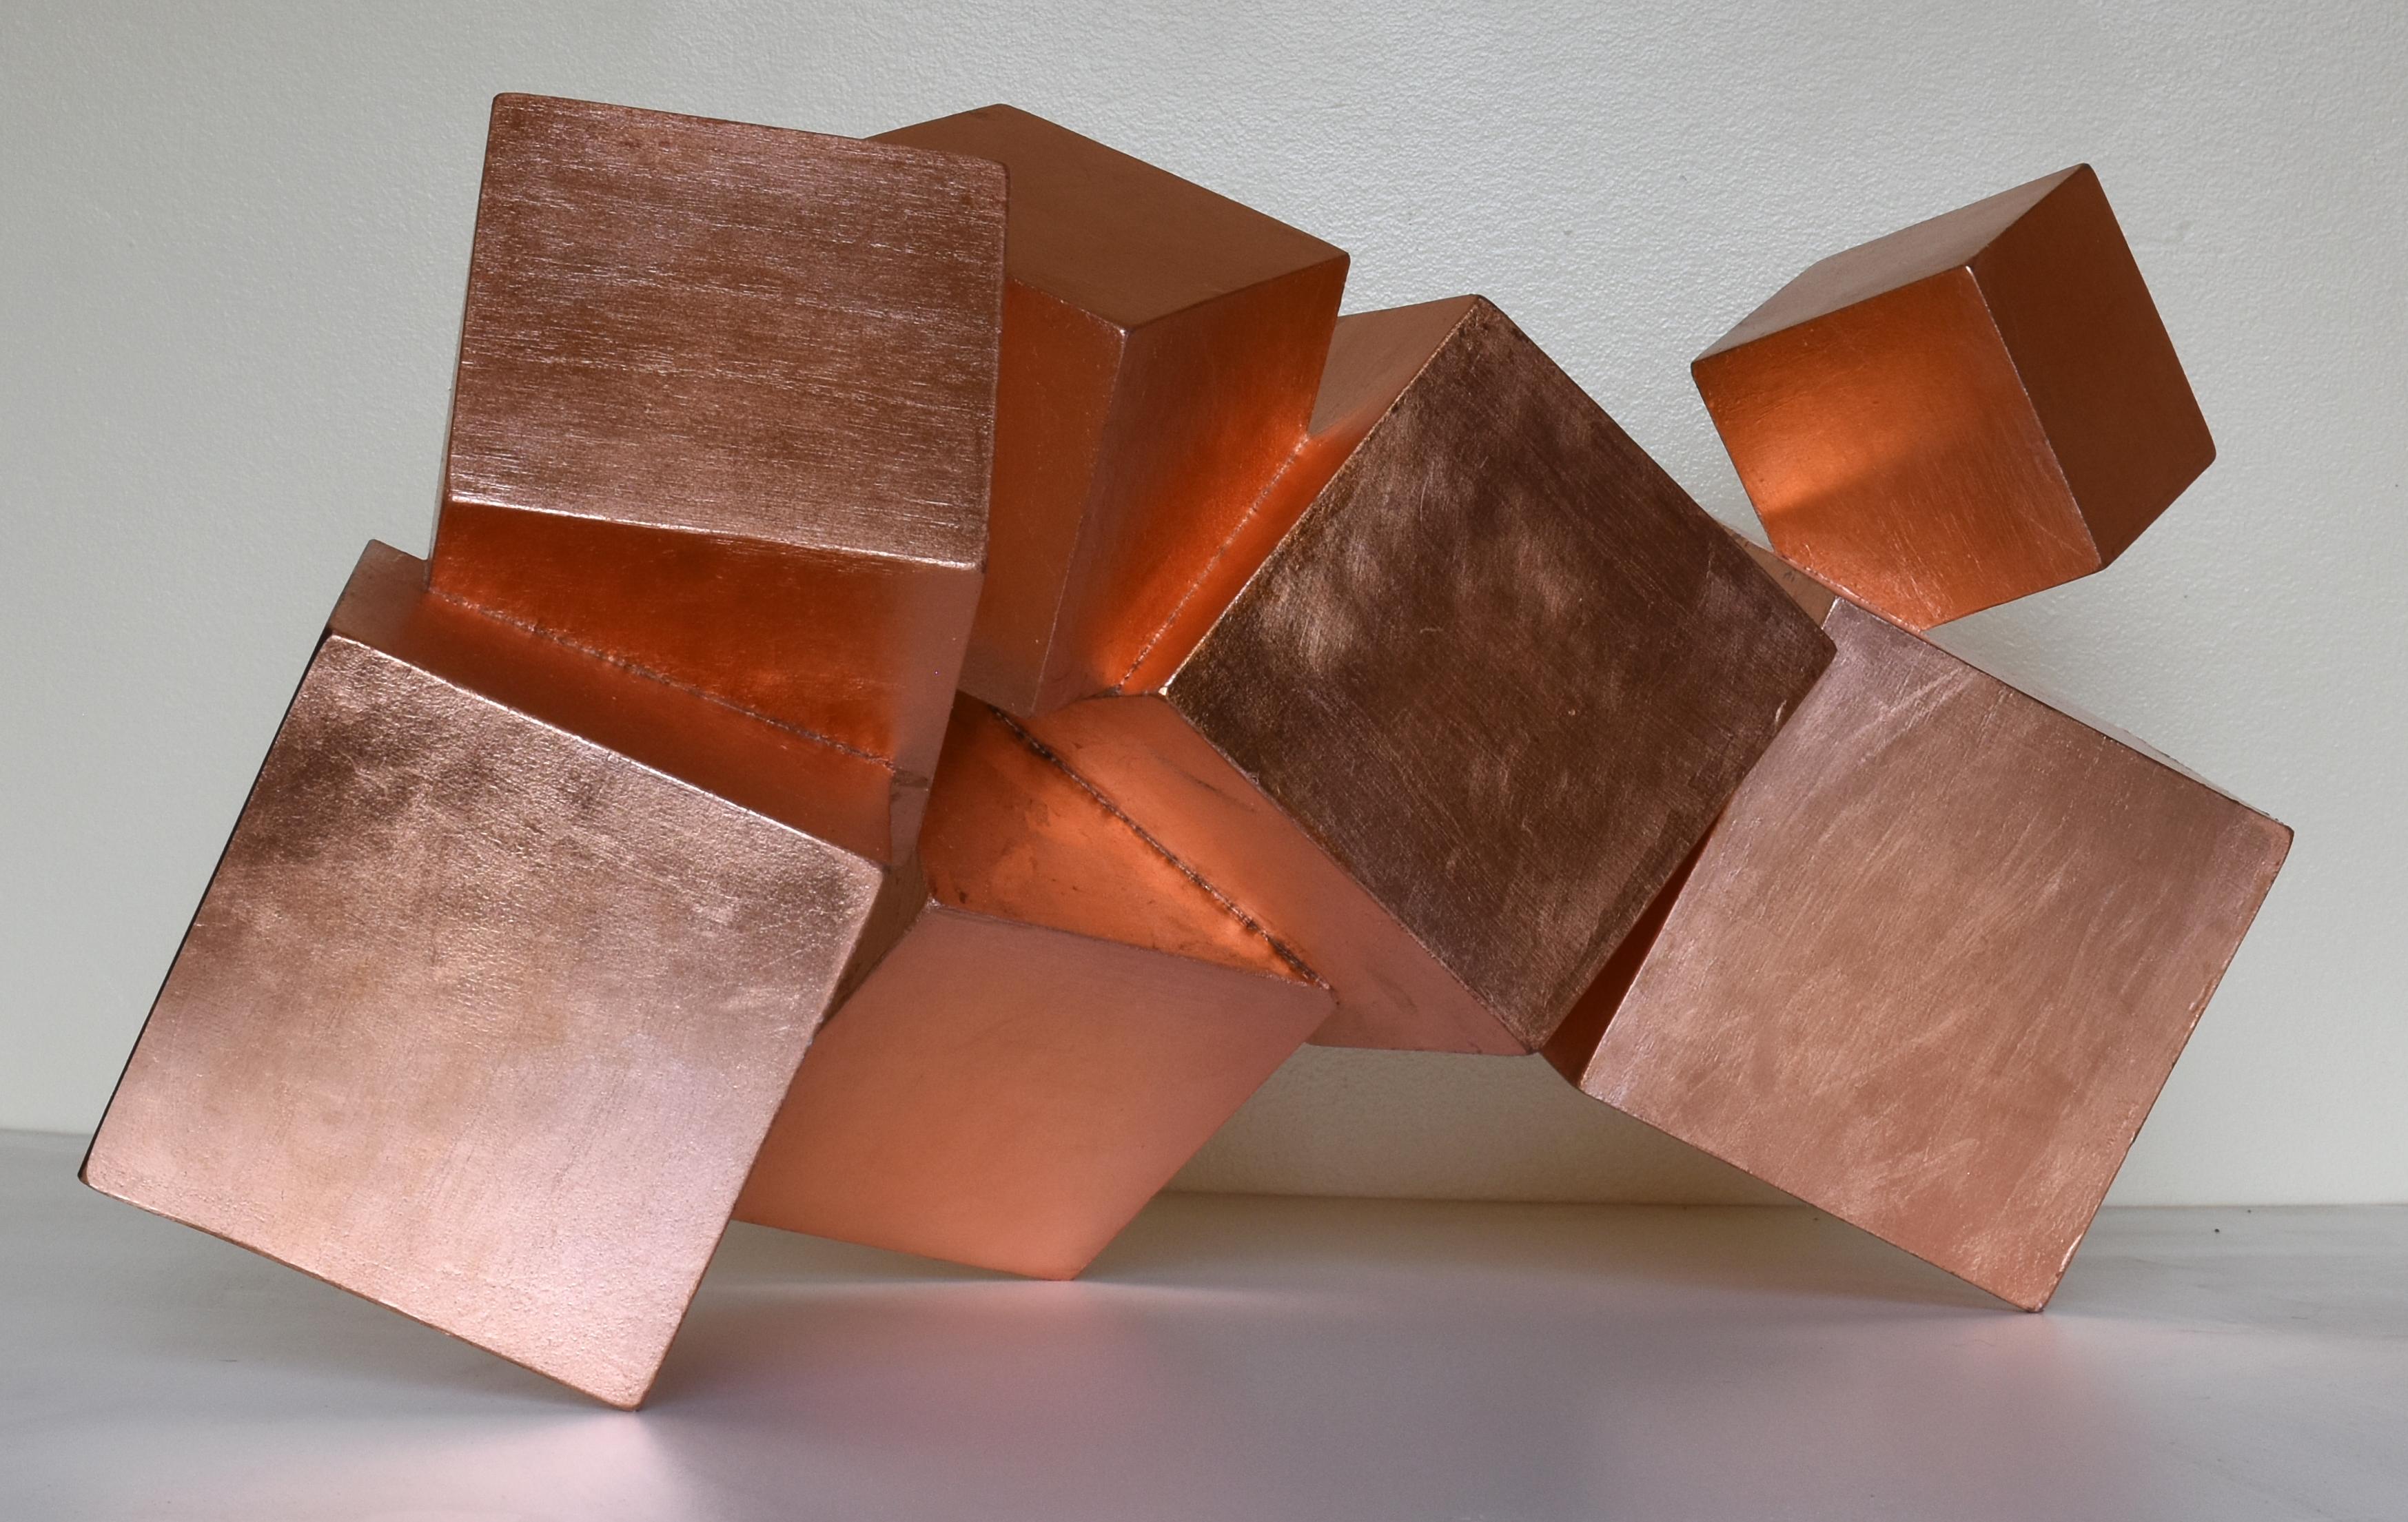 Copper and Mahogany Pyrite (exotic wood, metallic, cubic, table top sculpture) 15